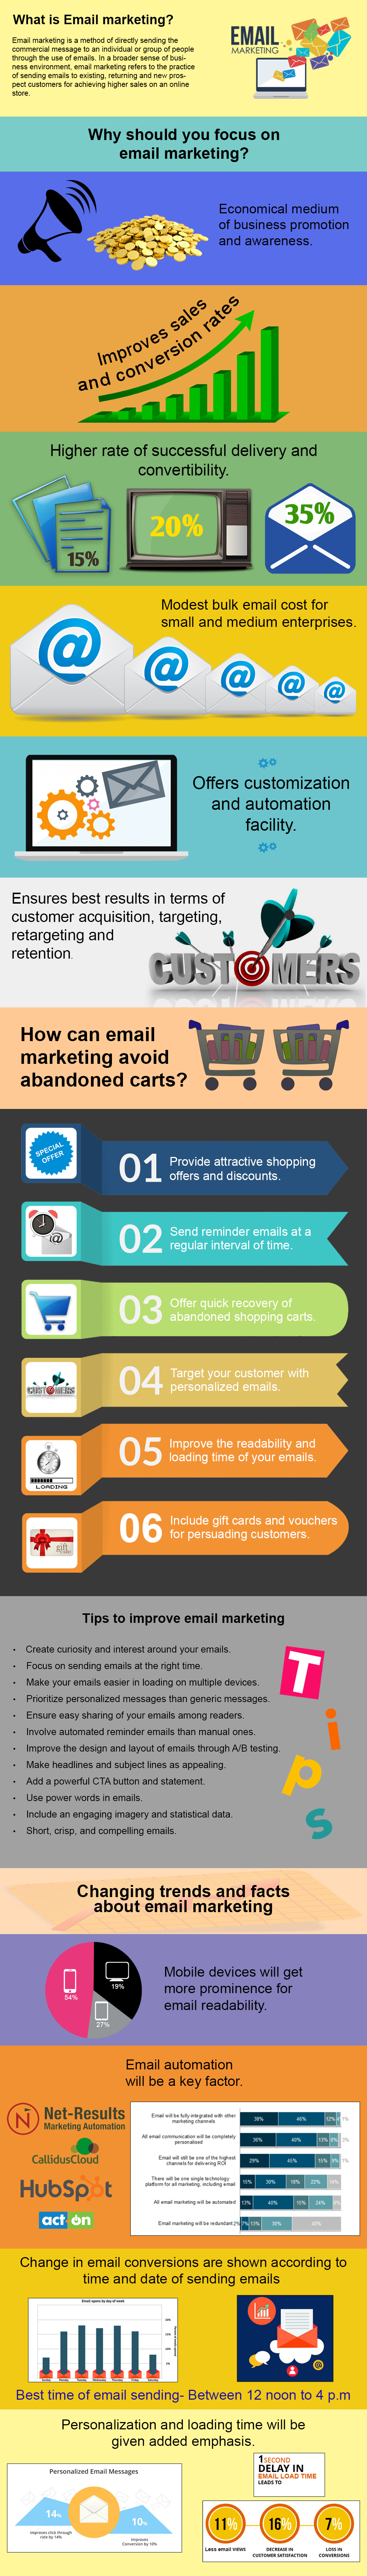 eCommerce Conversions durch E-Mail-Marketing | Wissensband